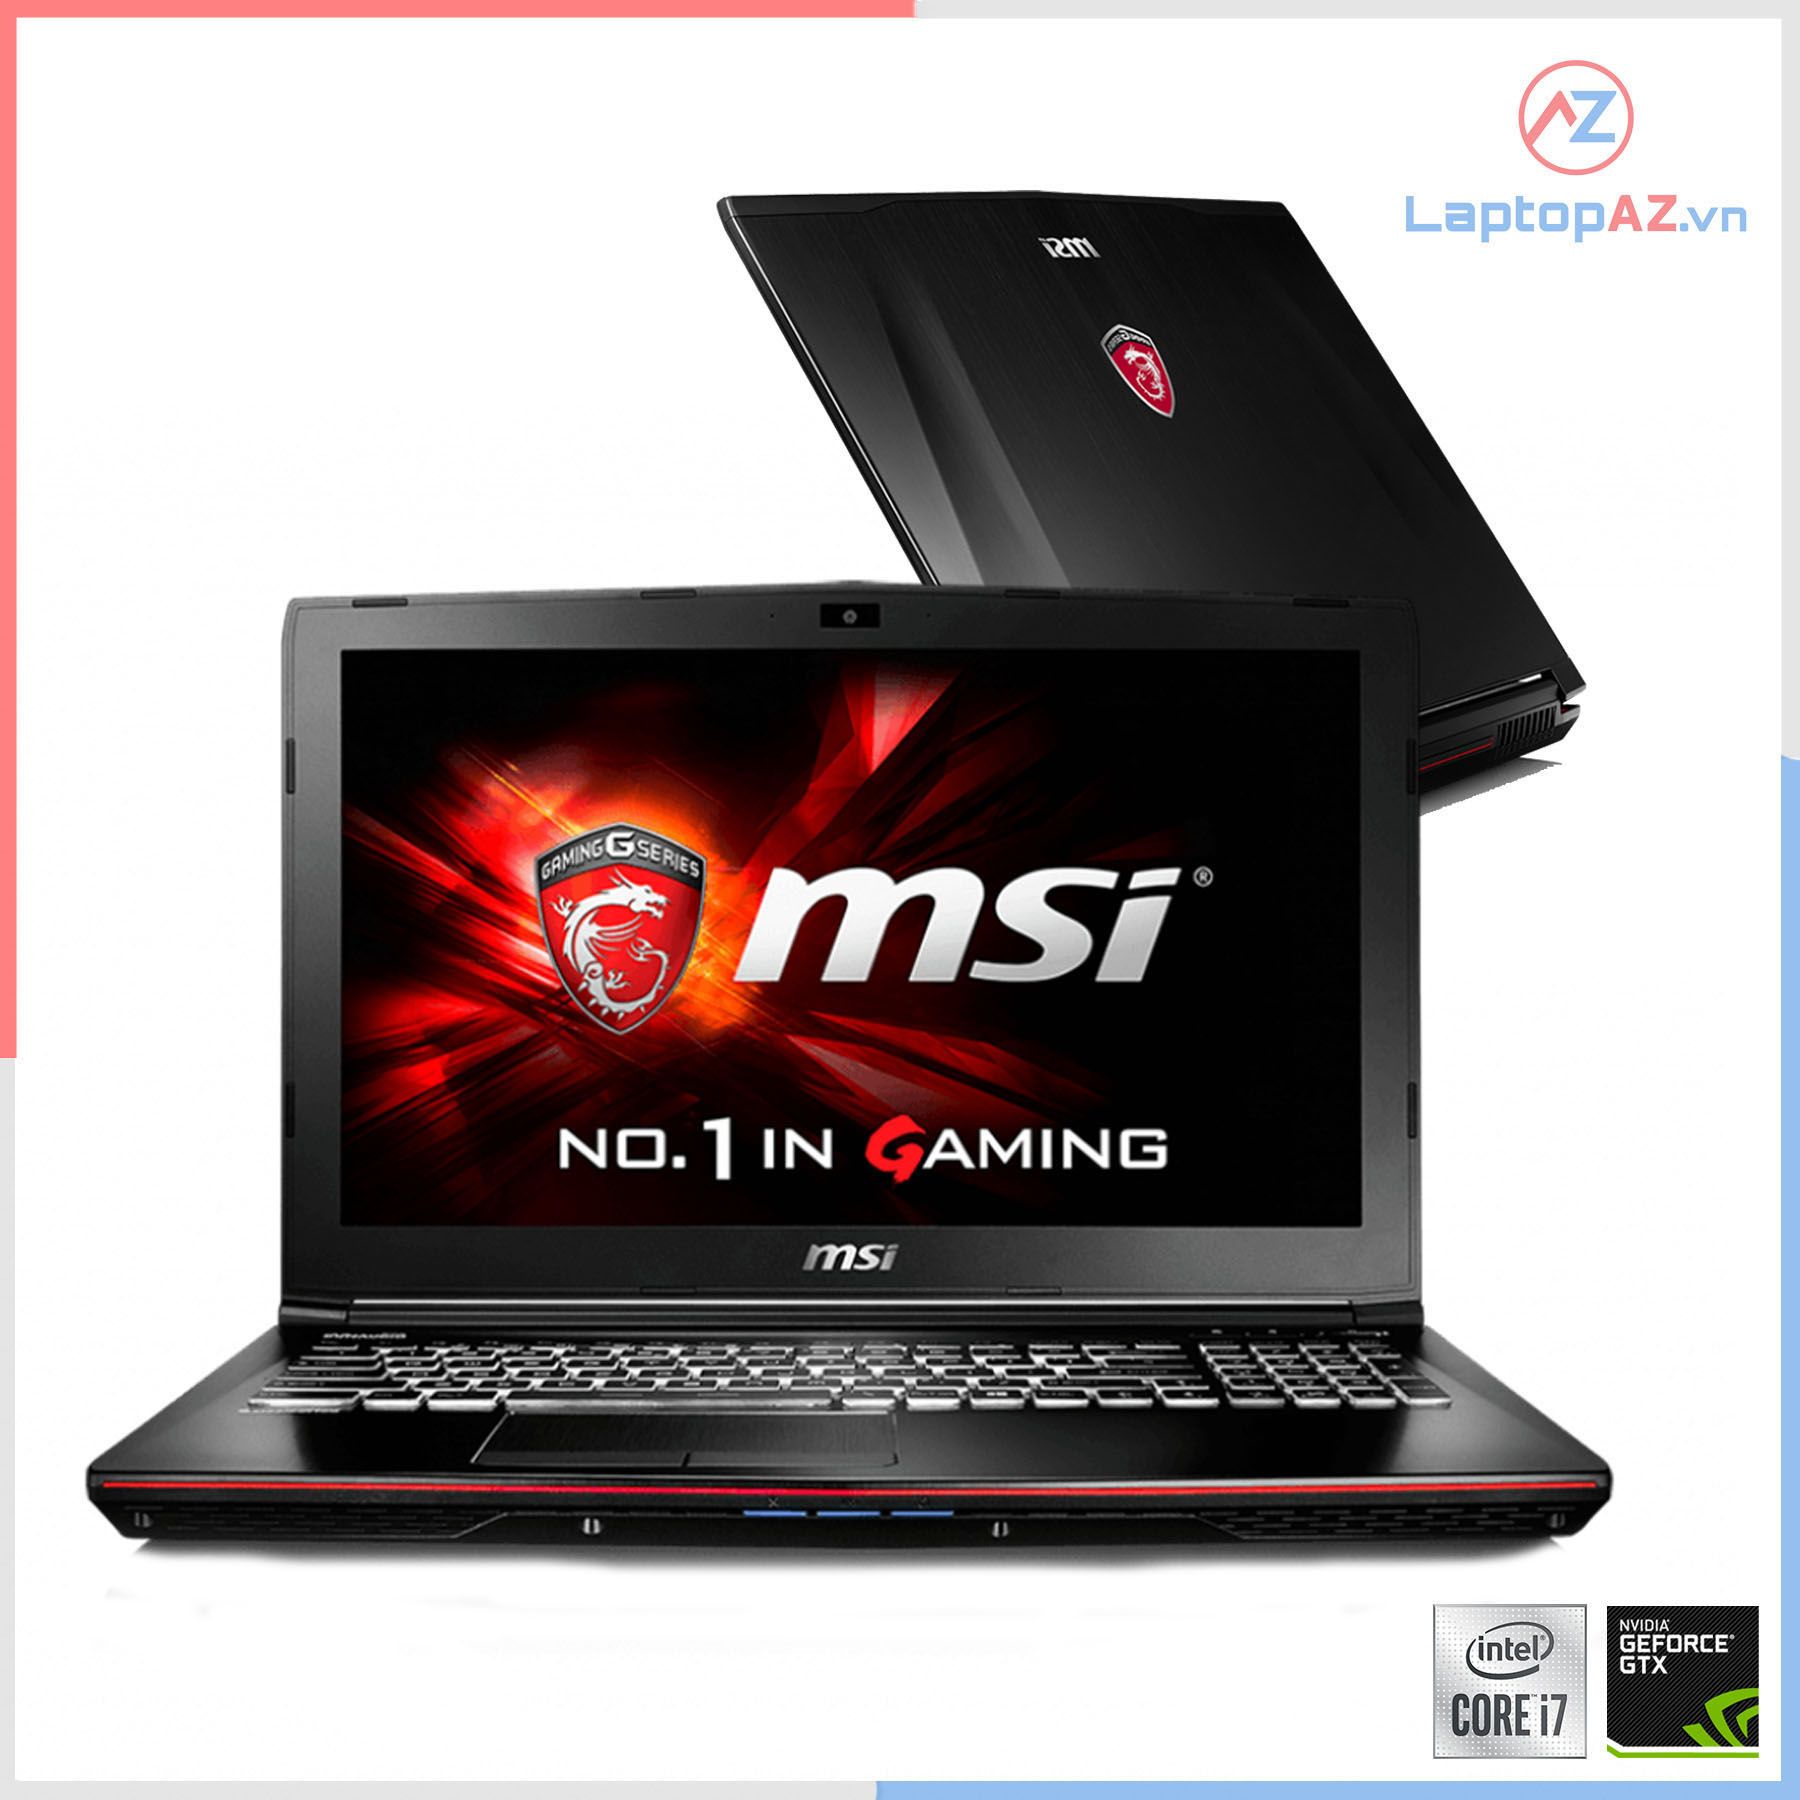 Laptop MSI GE62 6QF (Core i7-6700HQ, 8GB, 128GB + 1TB, VGA 3GB NVIDIA GTX 970M, 15.6 inch FHD IPS)